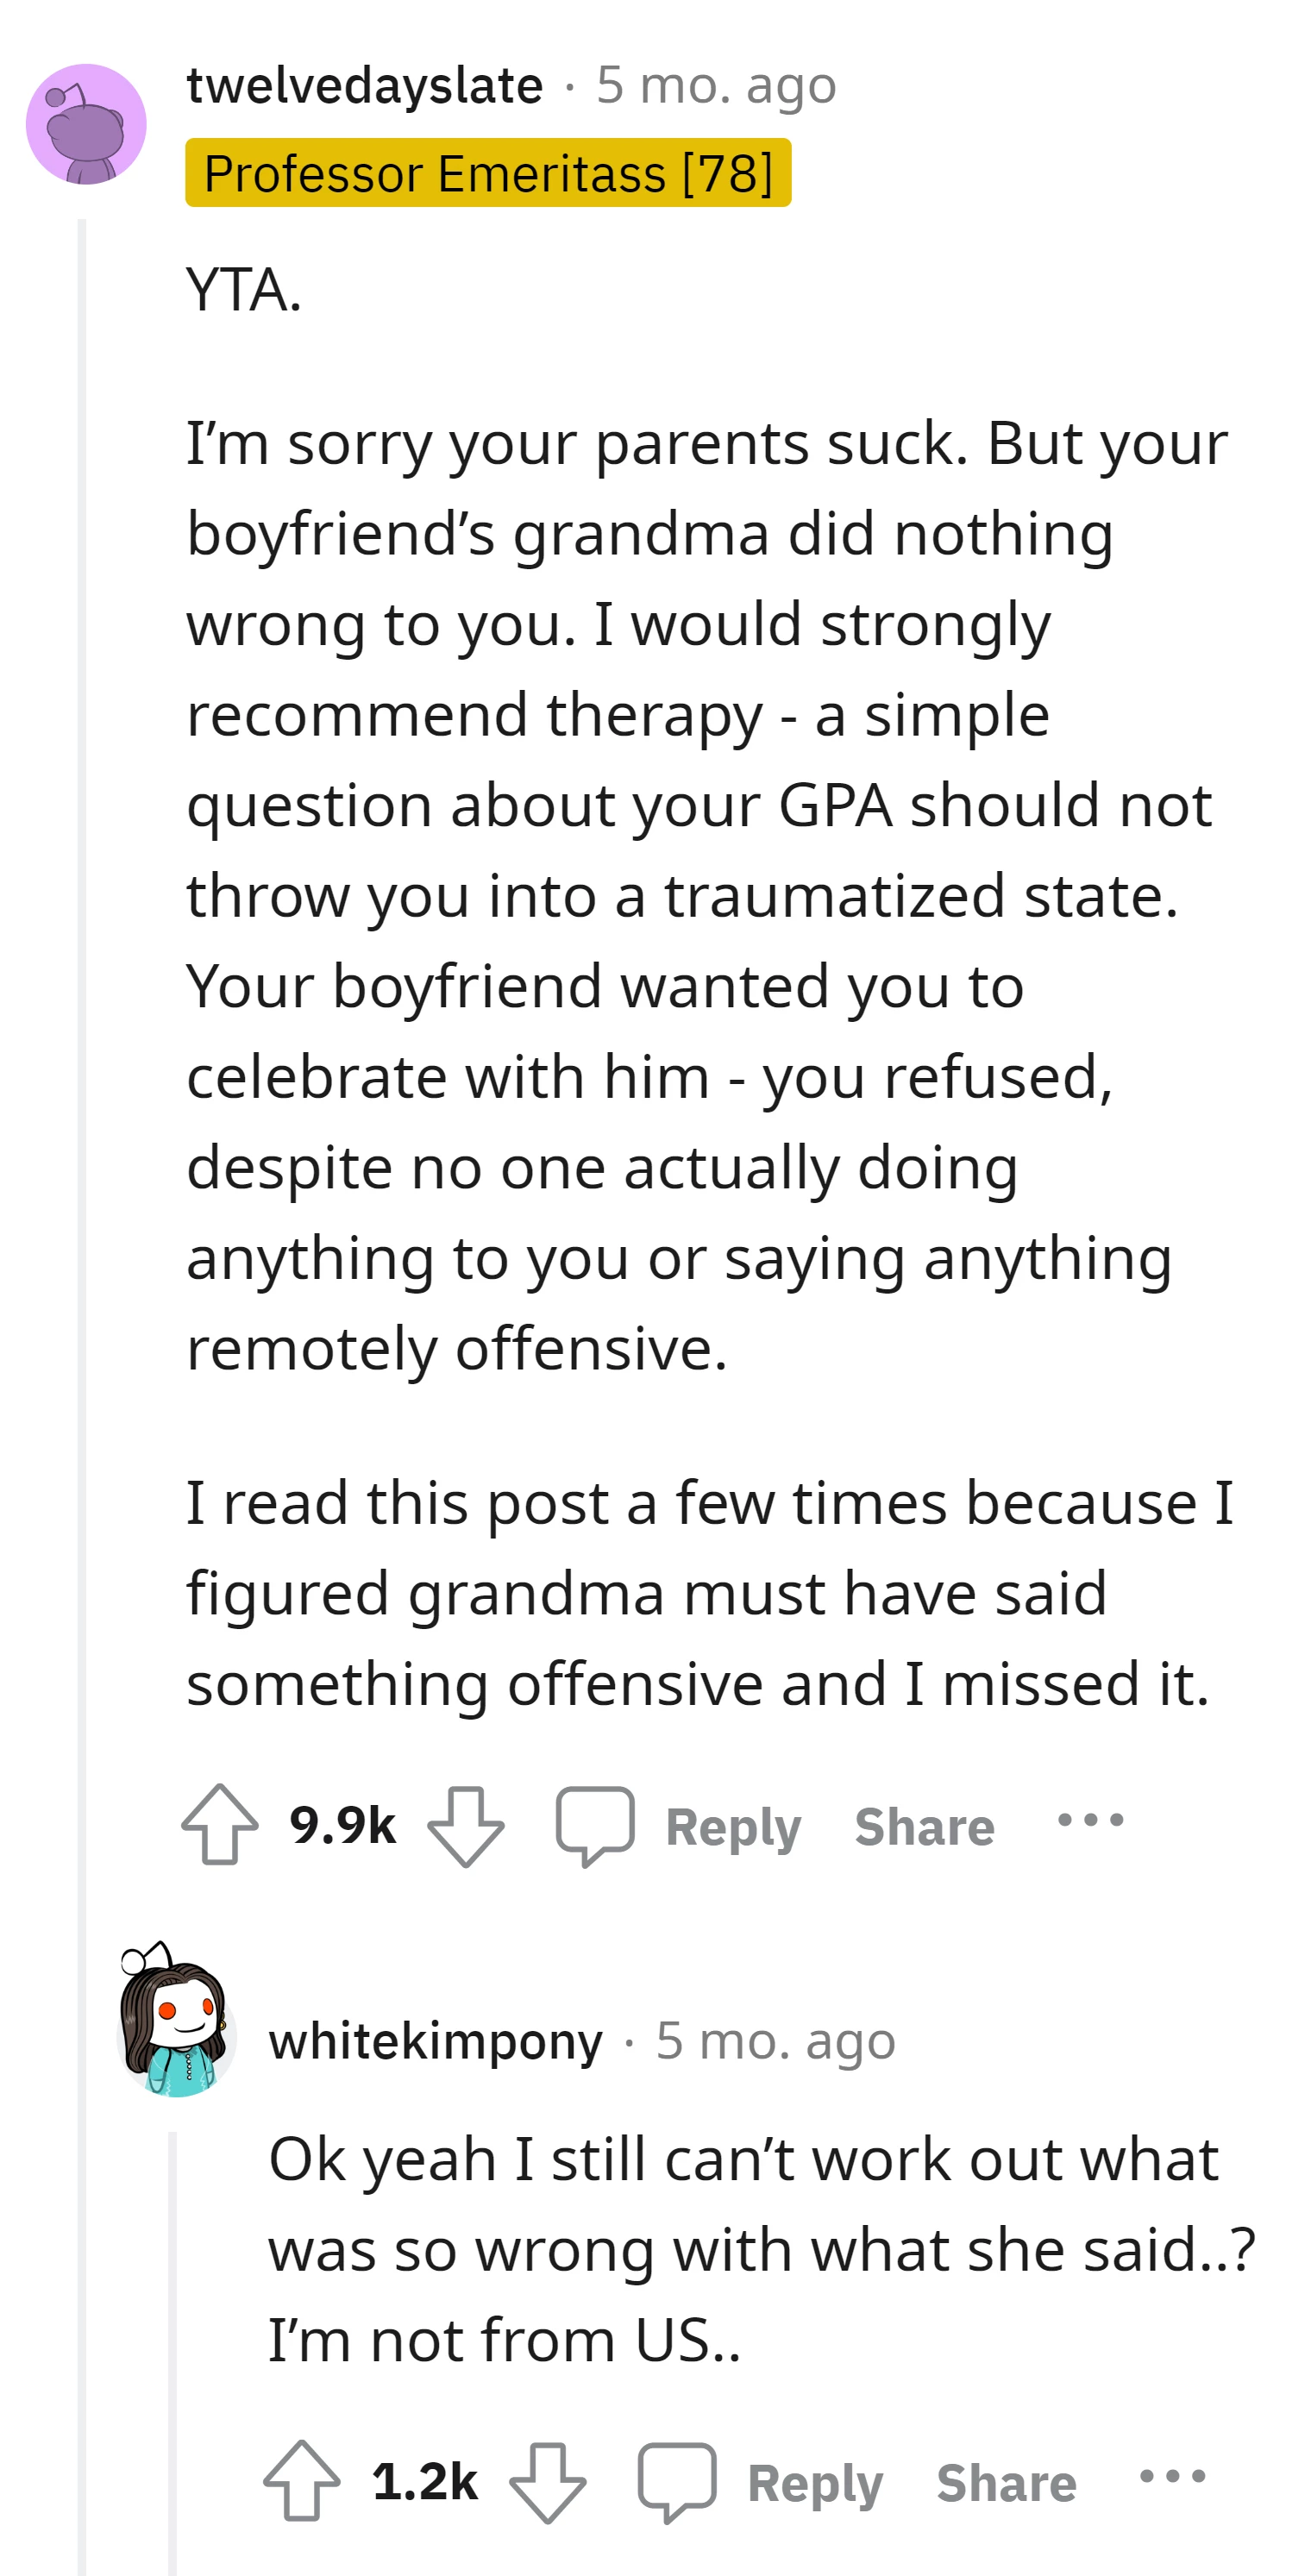 The boyfriend's grandma did nothing wrong